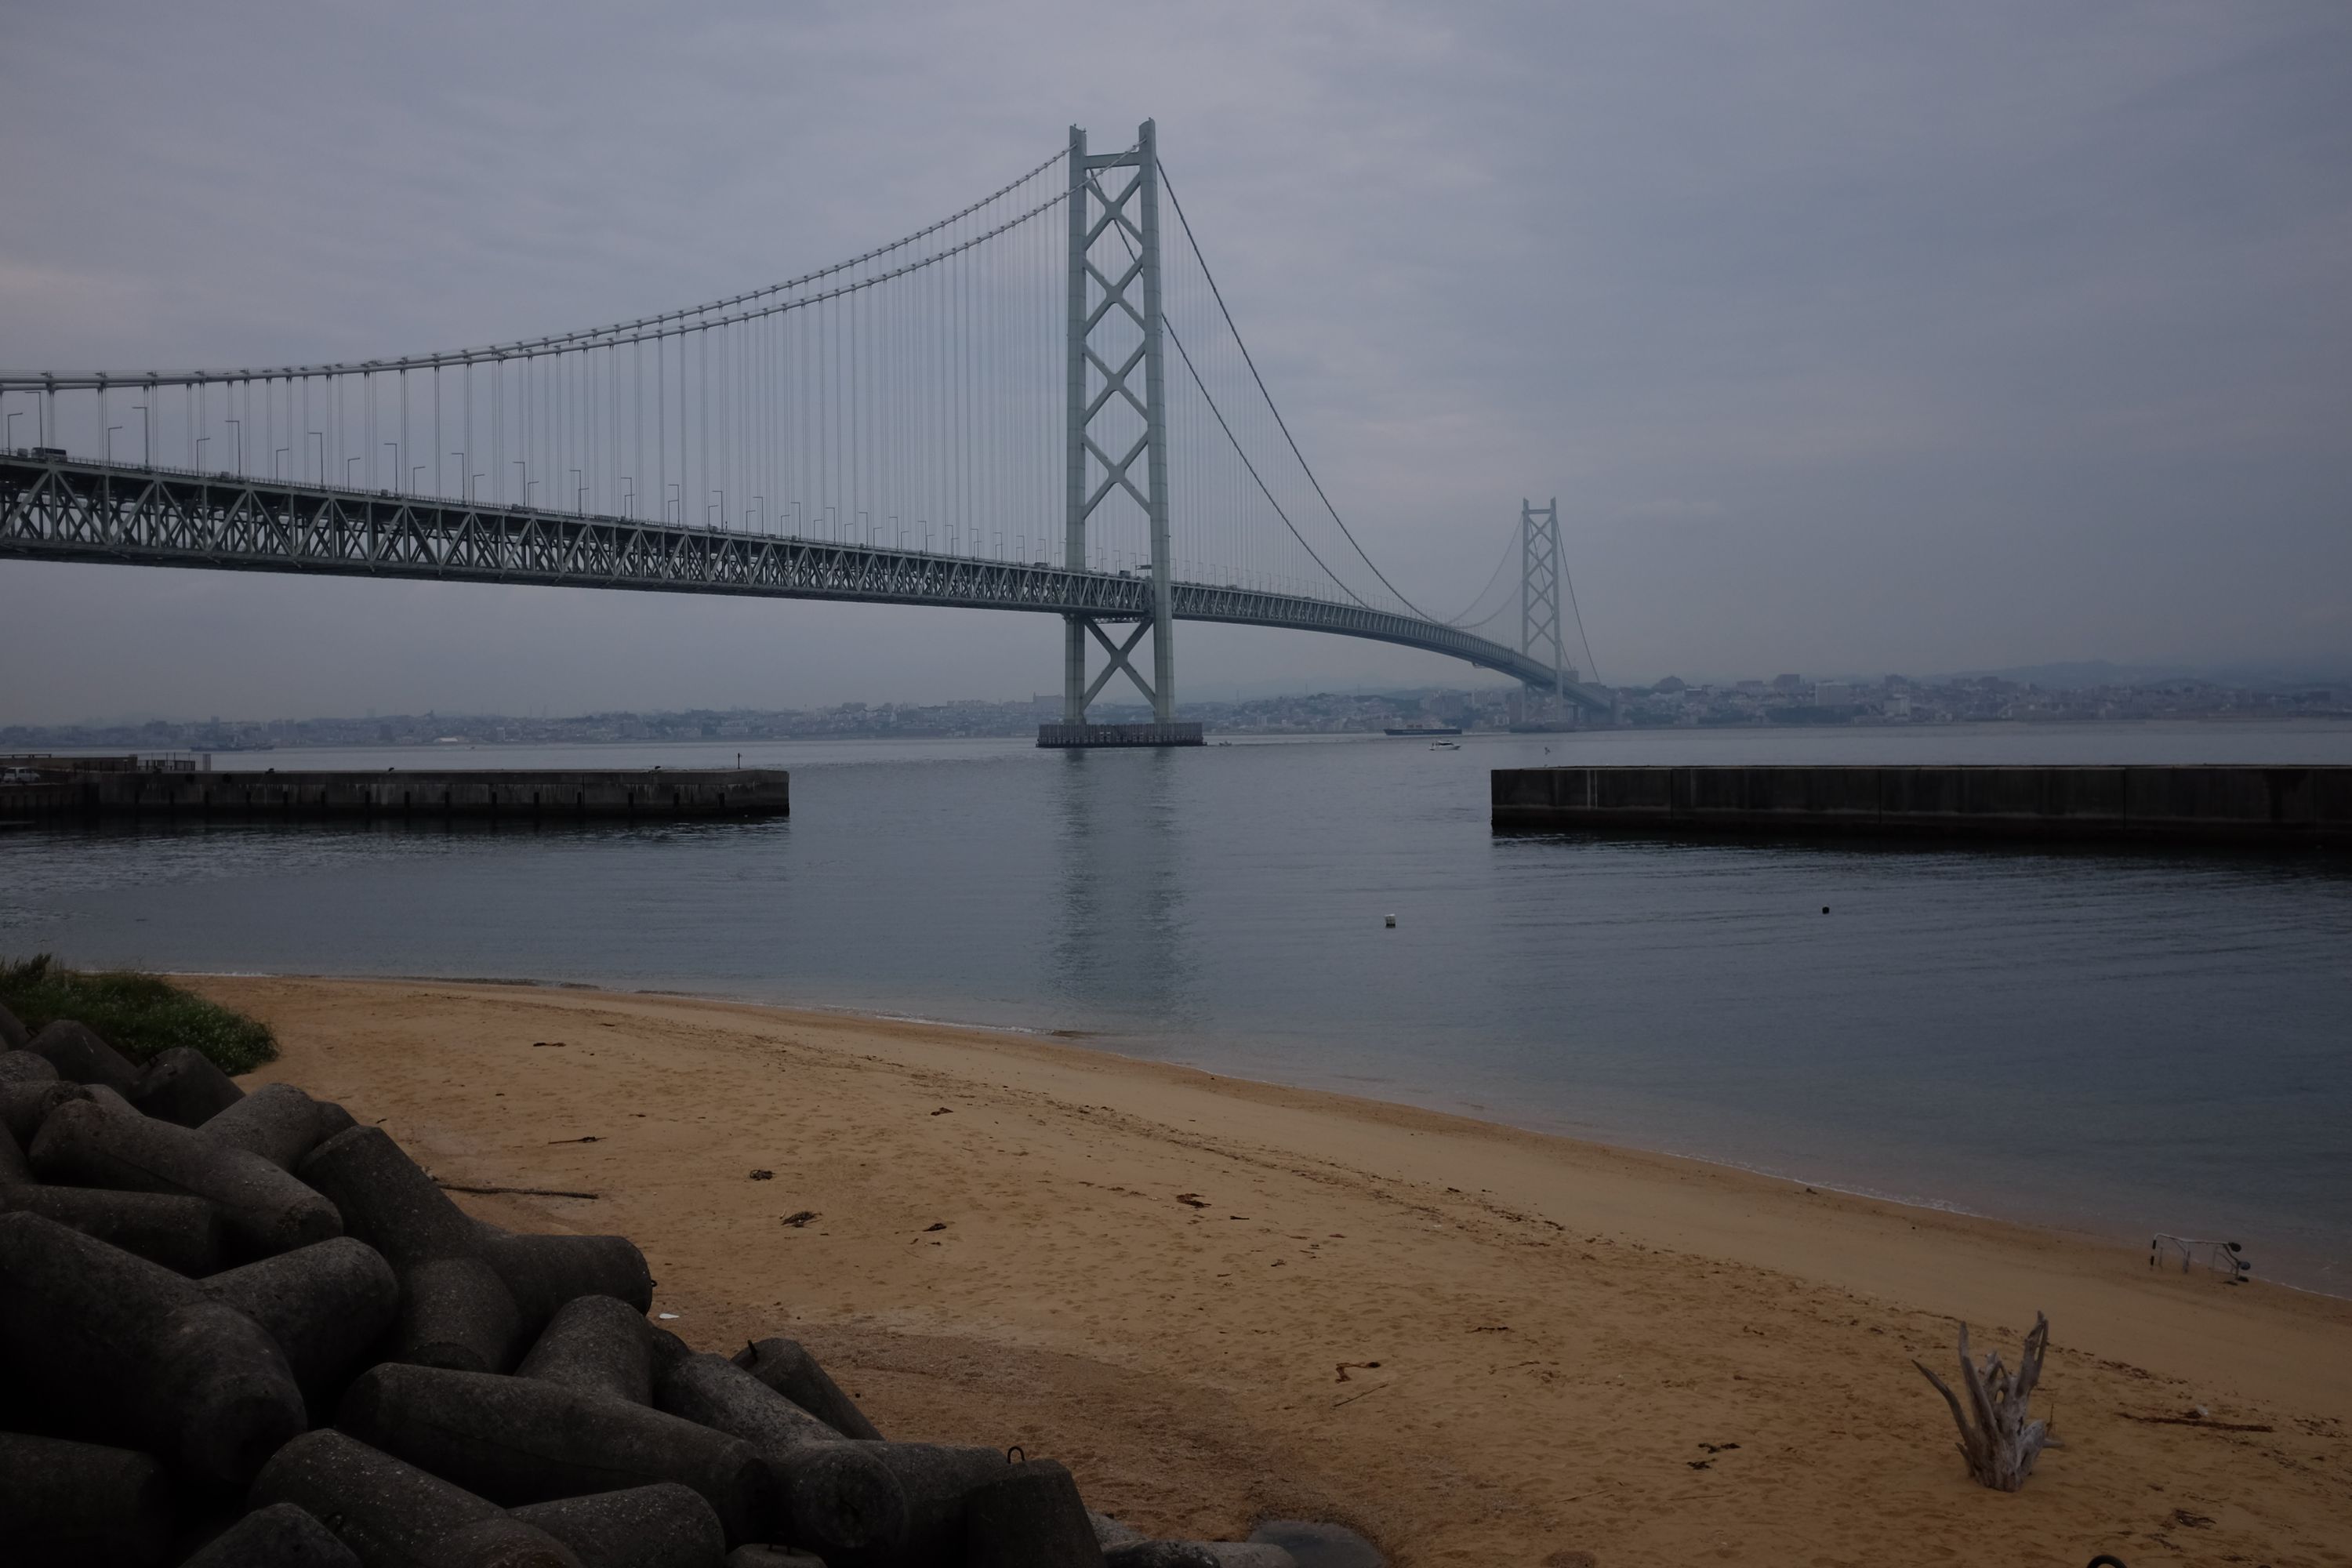 The Akashi Kaikyō Bridge as seen from a sandy beach.